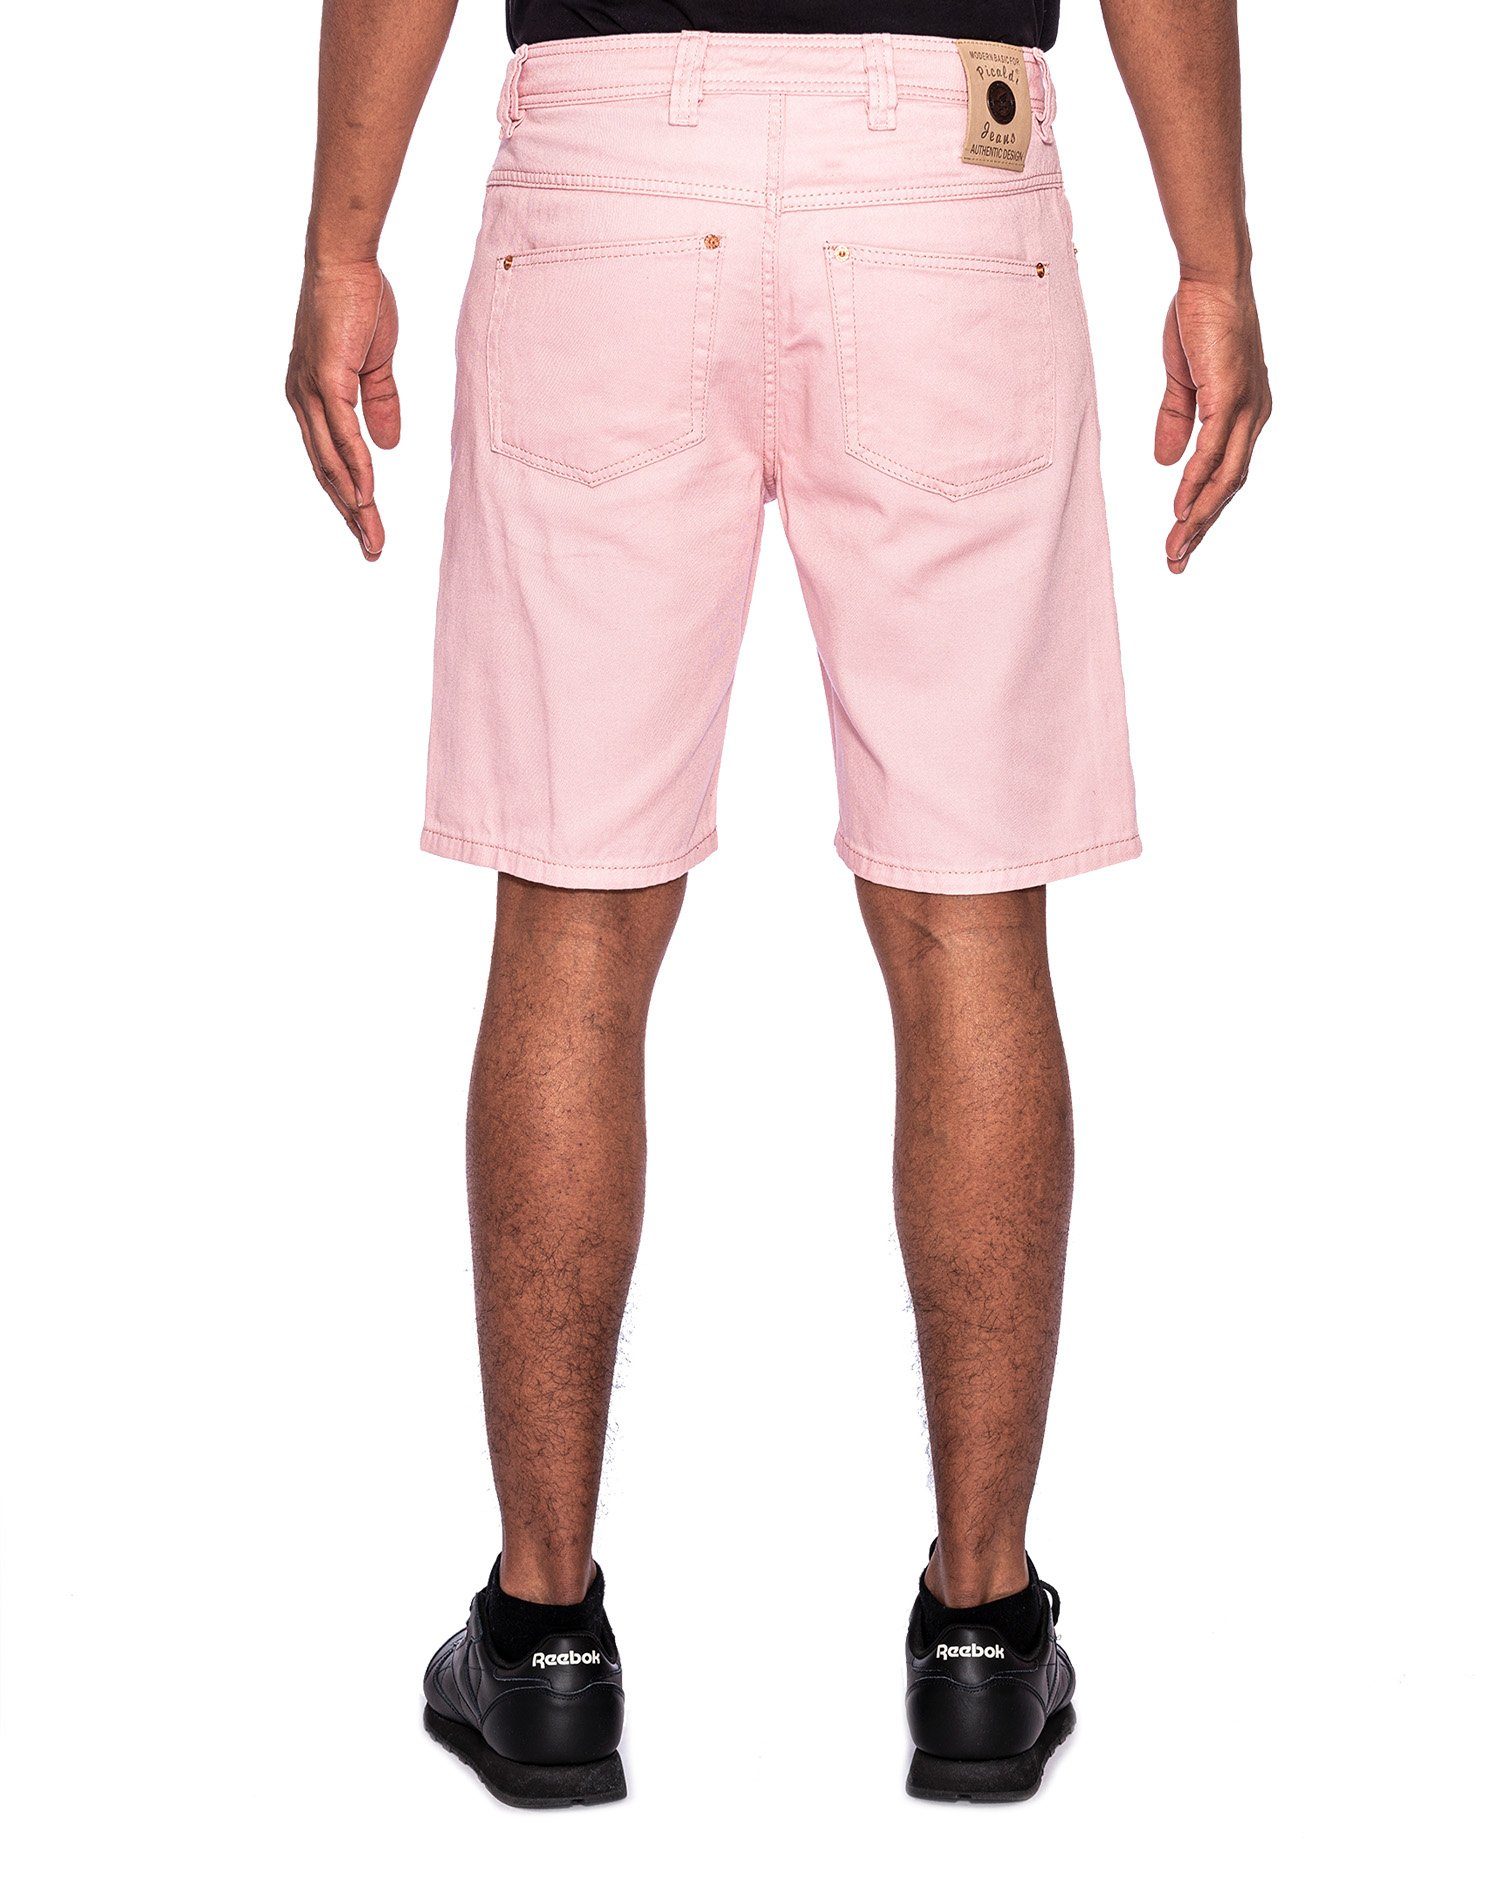 Chinoshorts Jeans Strandhose 472 PICALDI Sommerhose, Zicco Shorts Hose, Kurze Pink